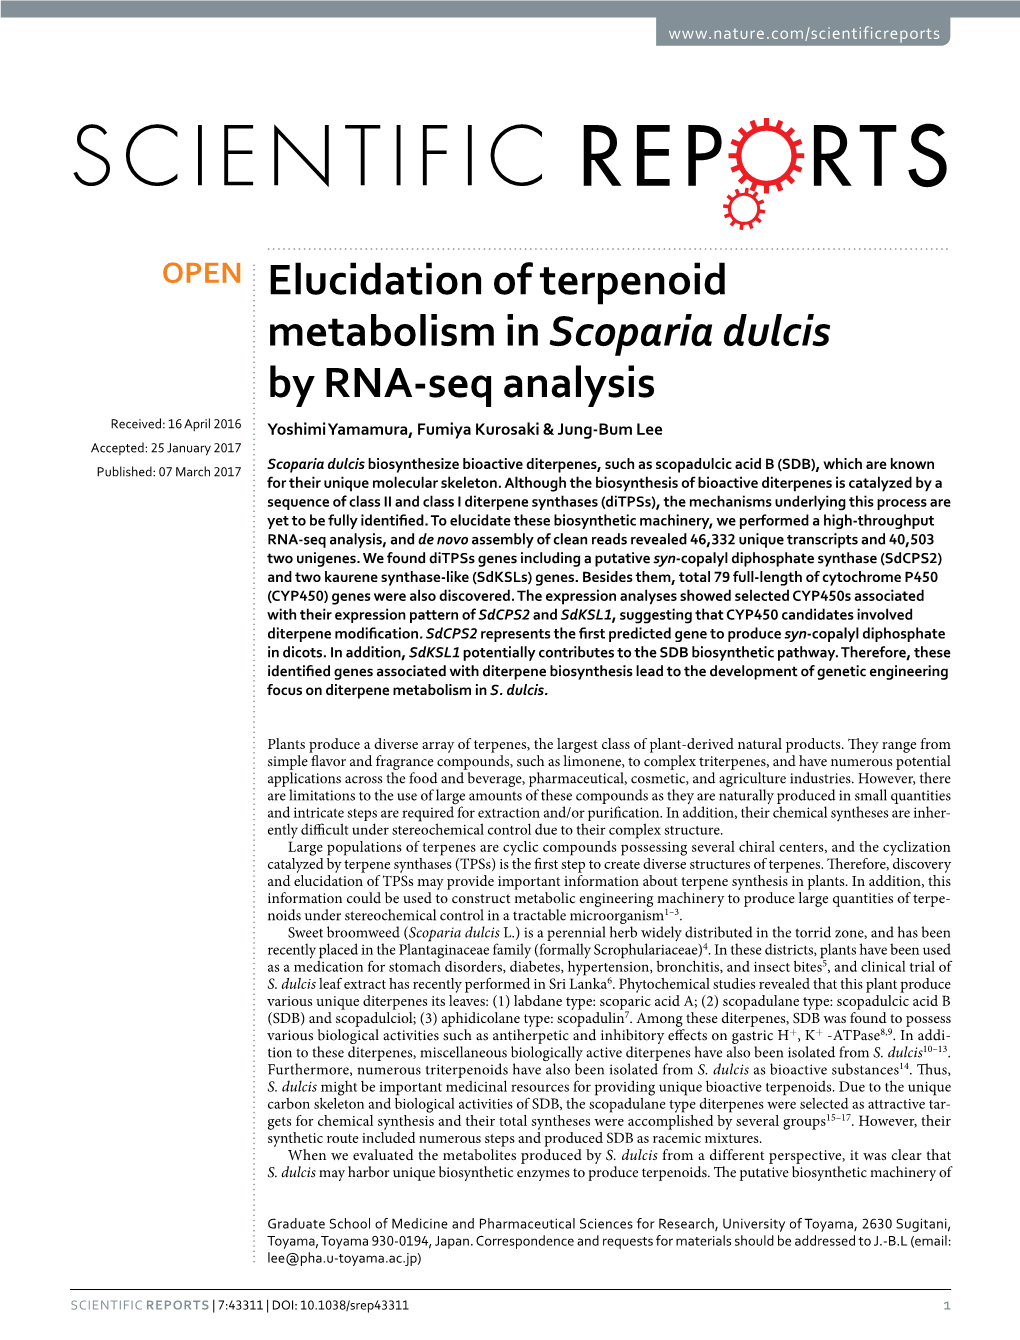 Elucidation of Terpenoid Metabolism in Scoparia Dulcis by RNA-Seq Analysis